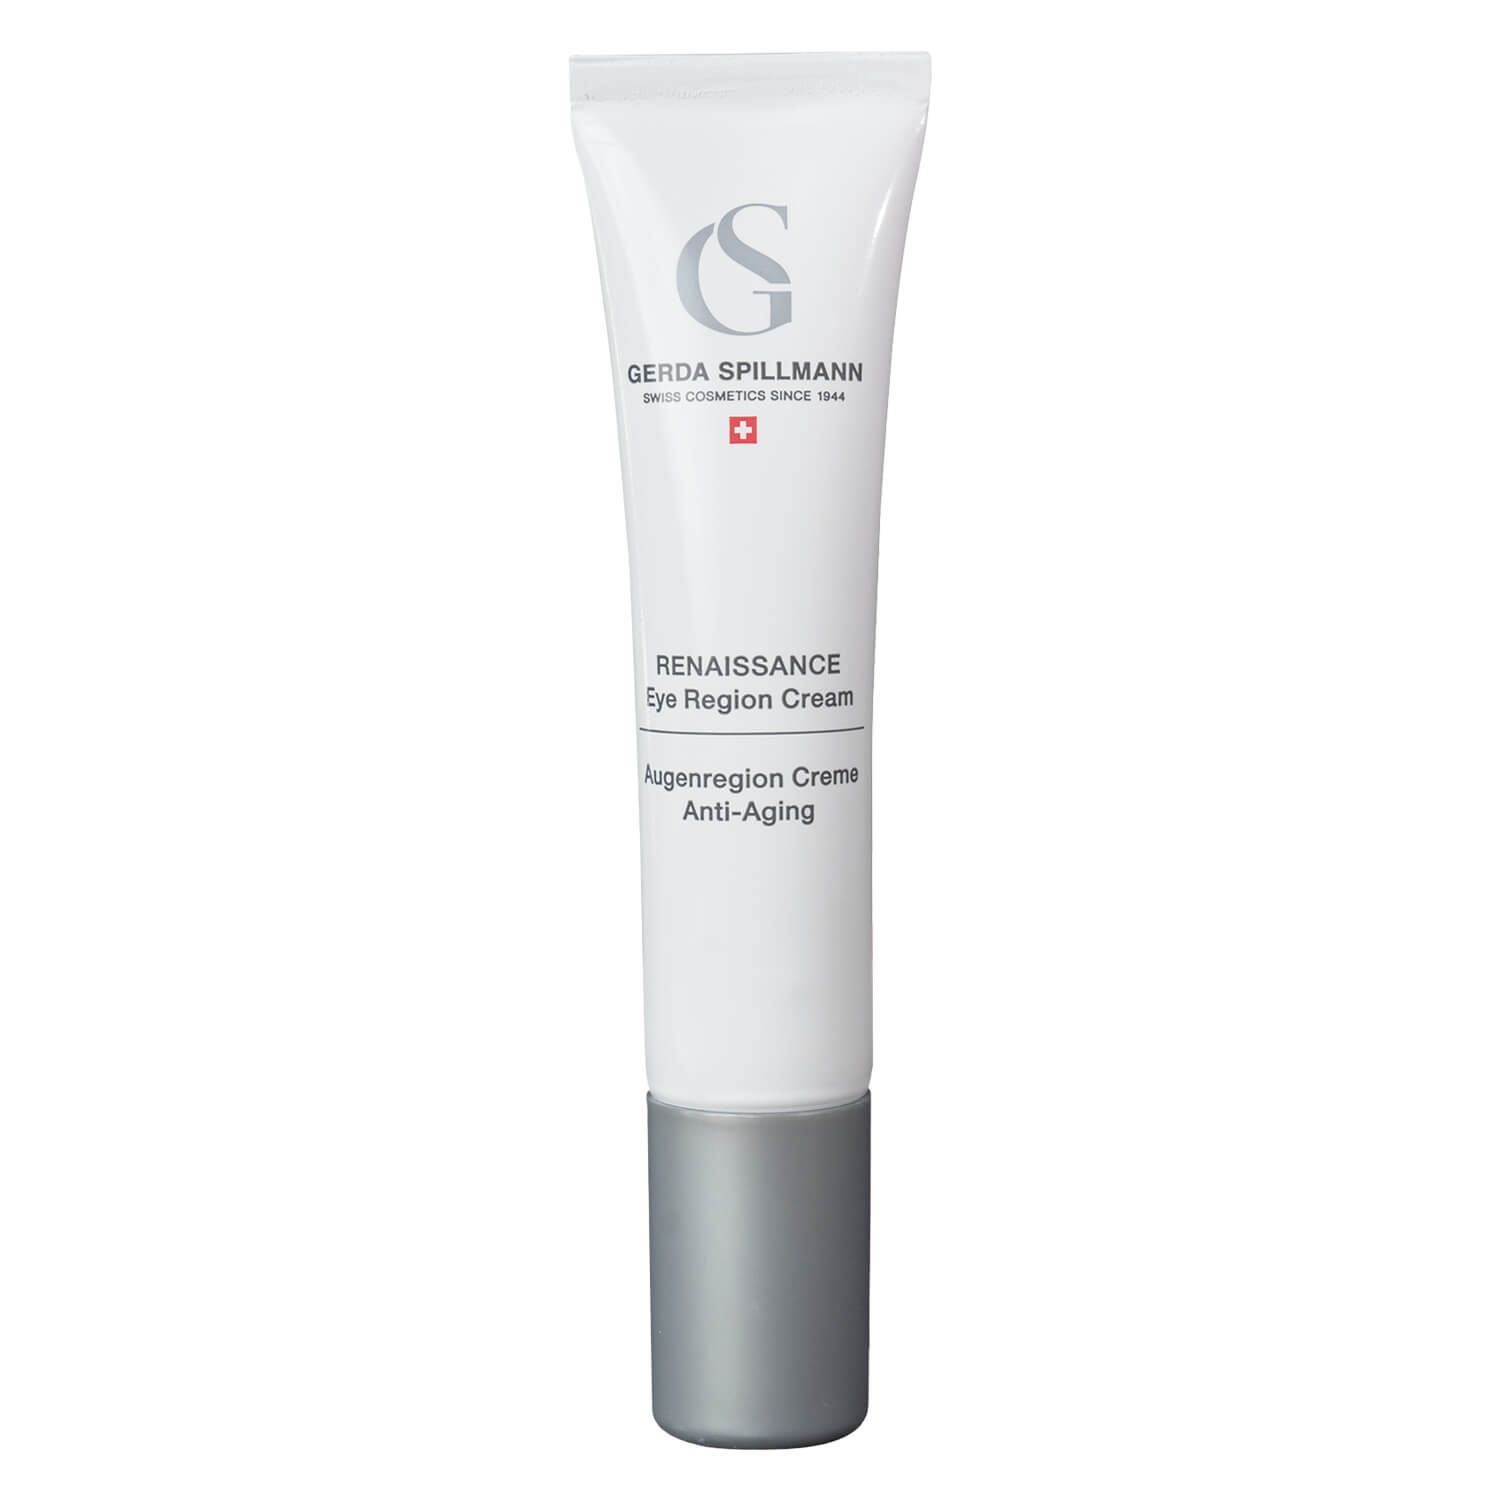 Product image from GS Skincare - Renaissance Eye Region Cream